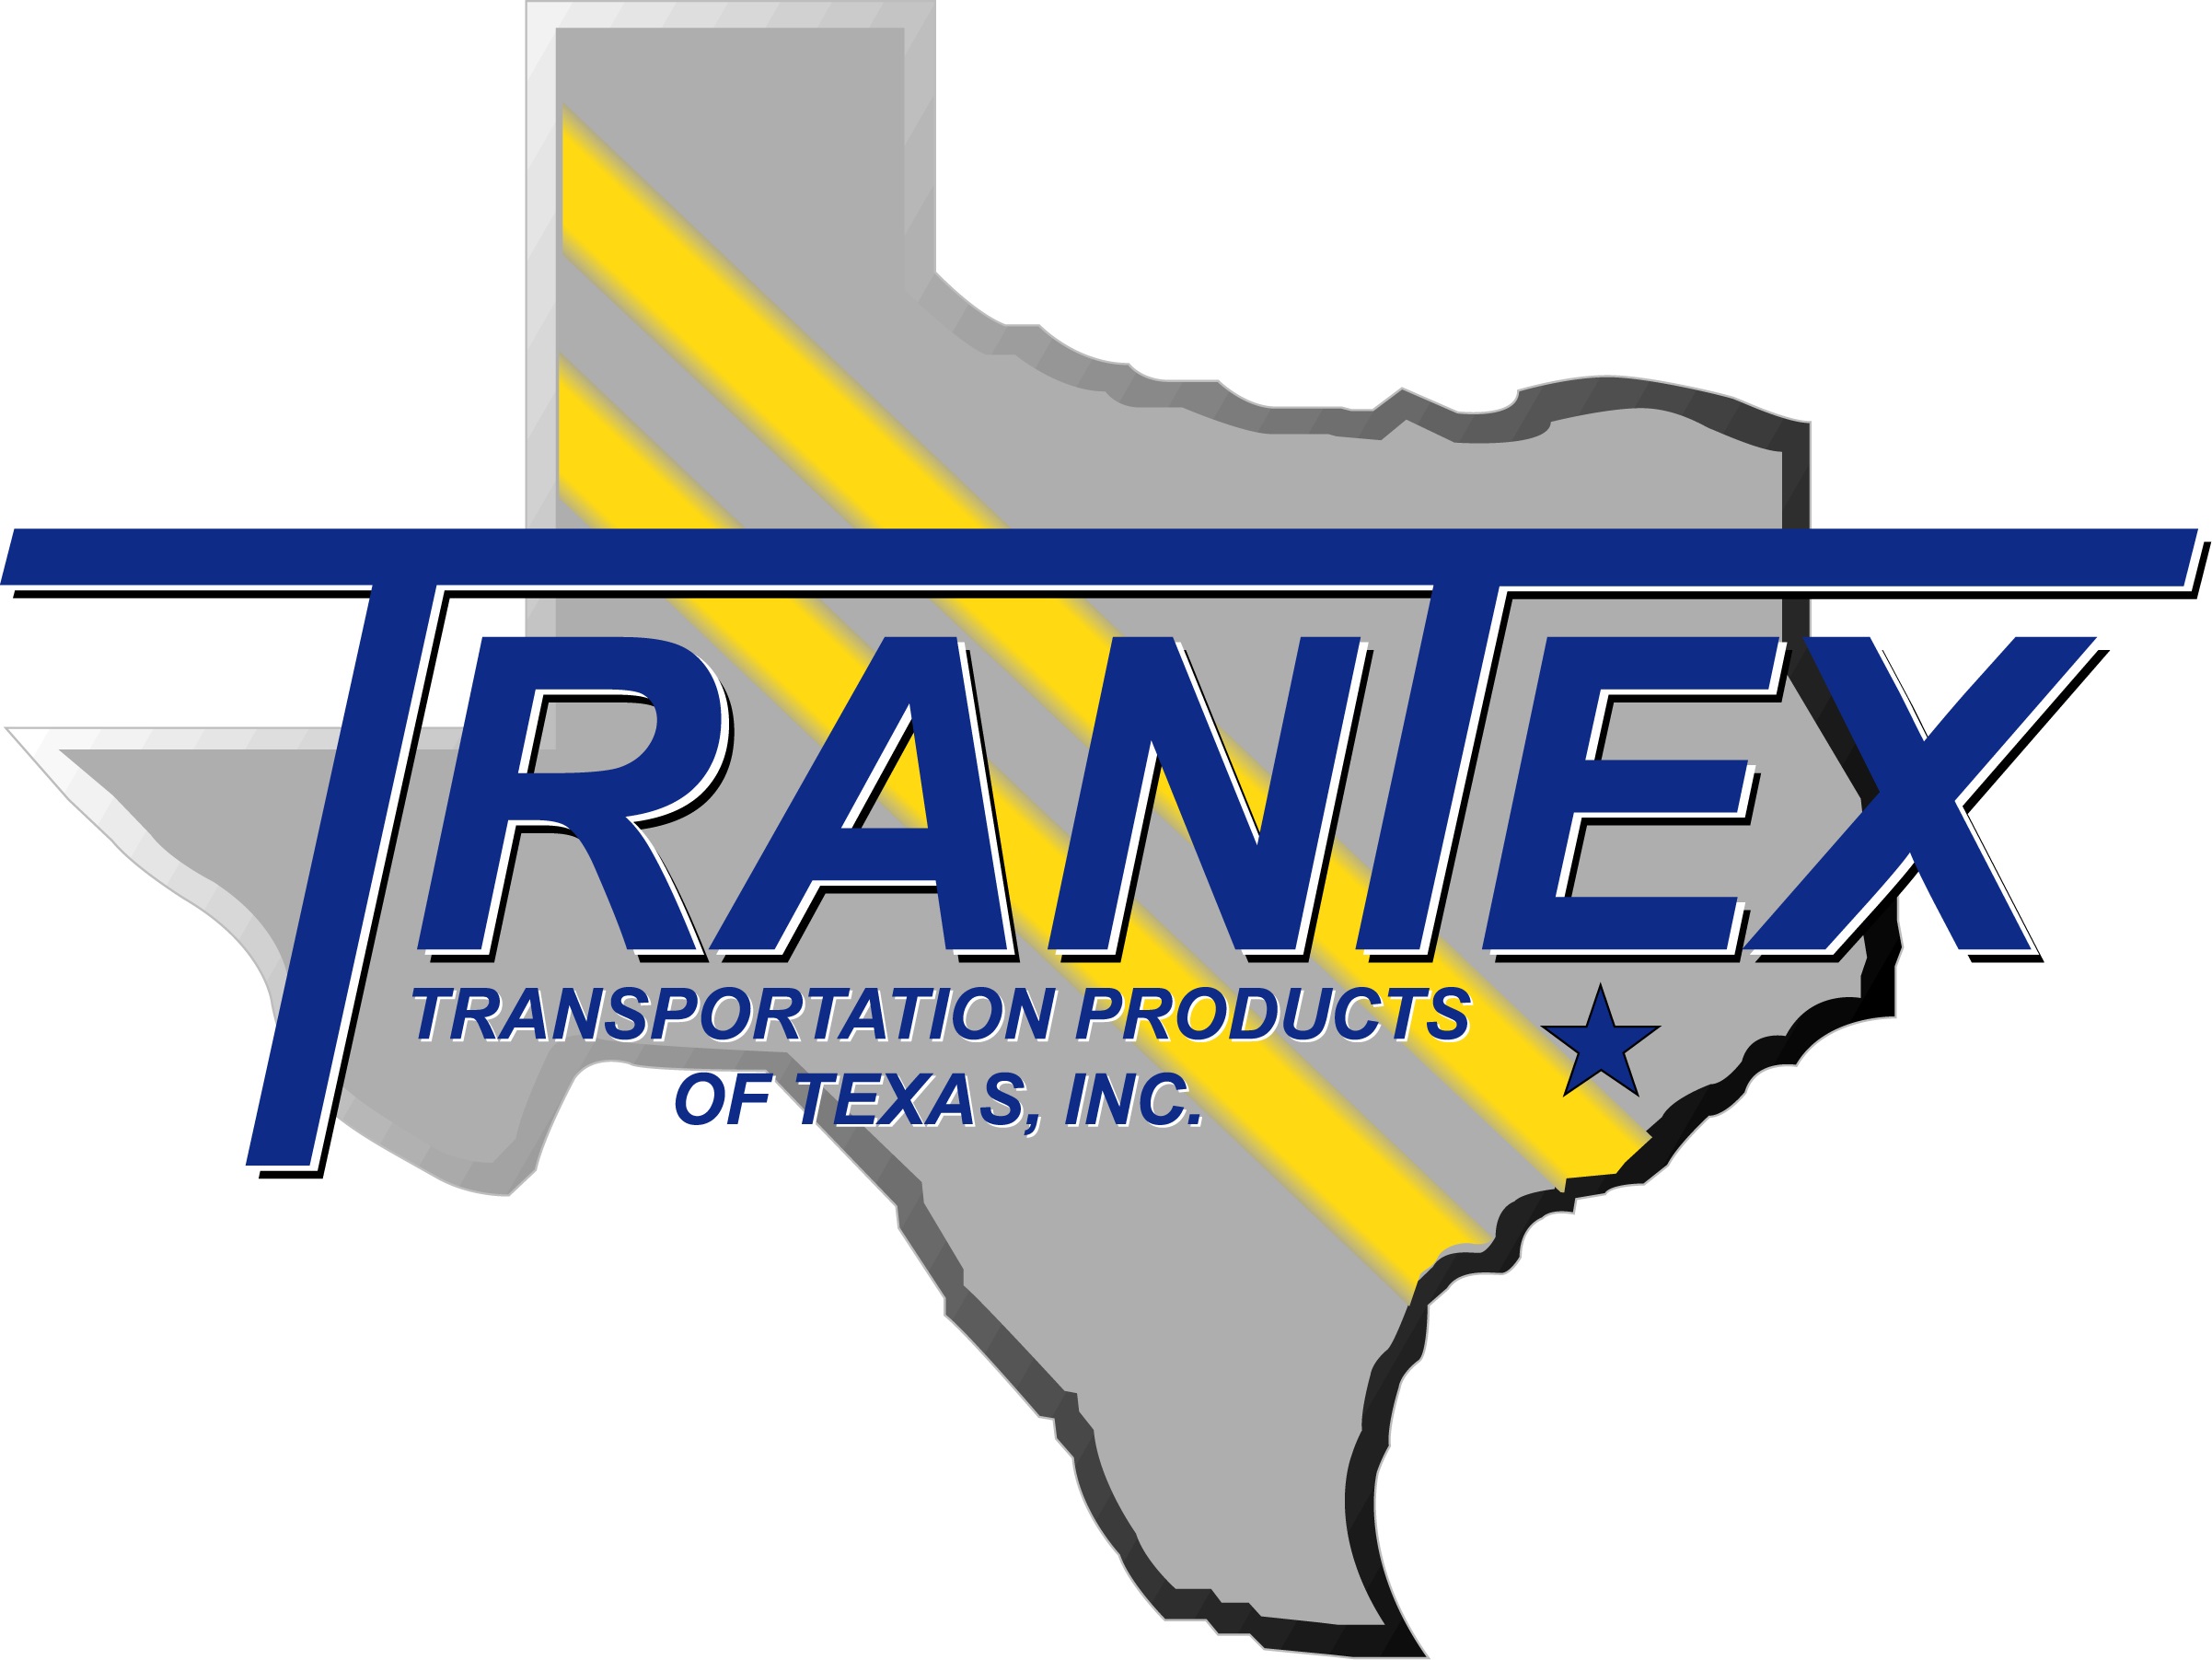 Trantex Transportation Products of Texas Inc